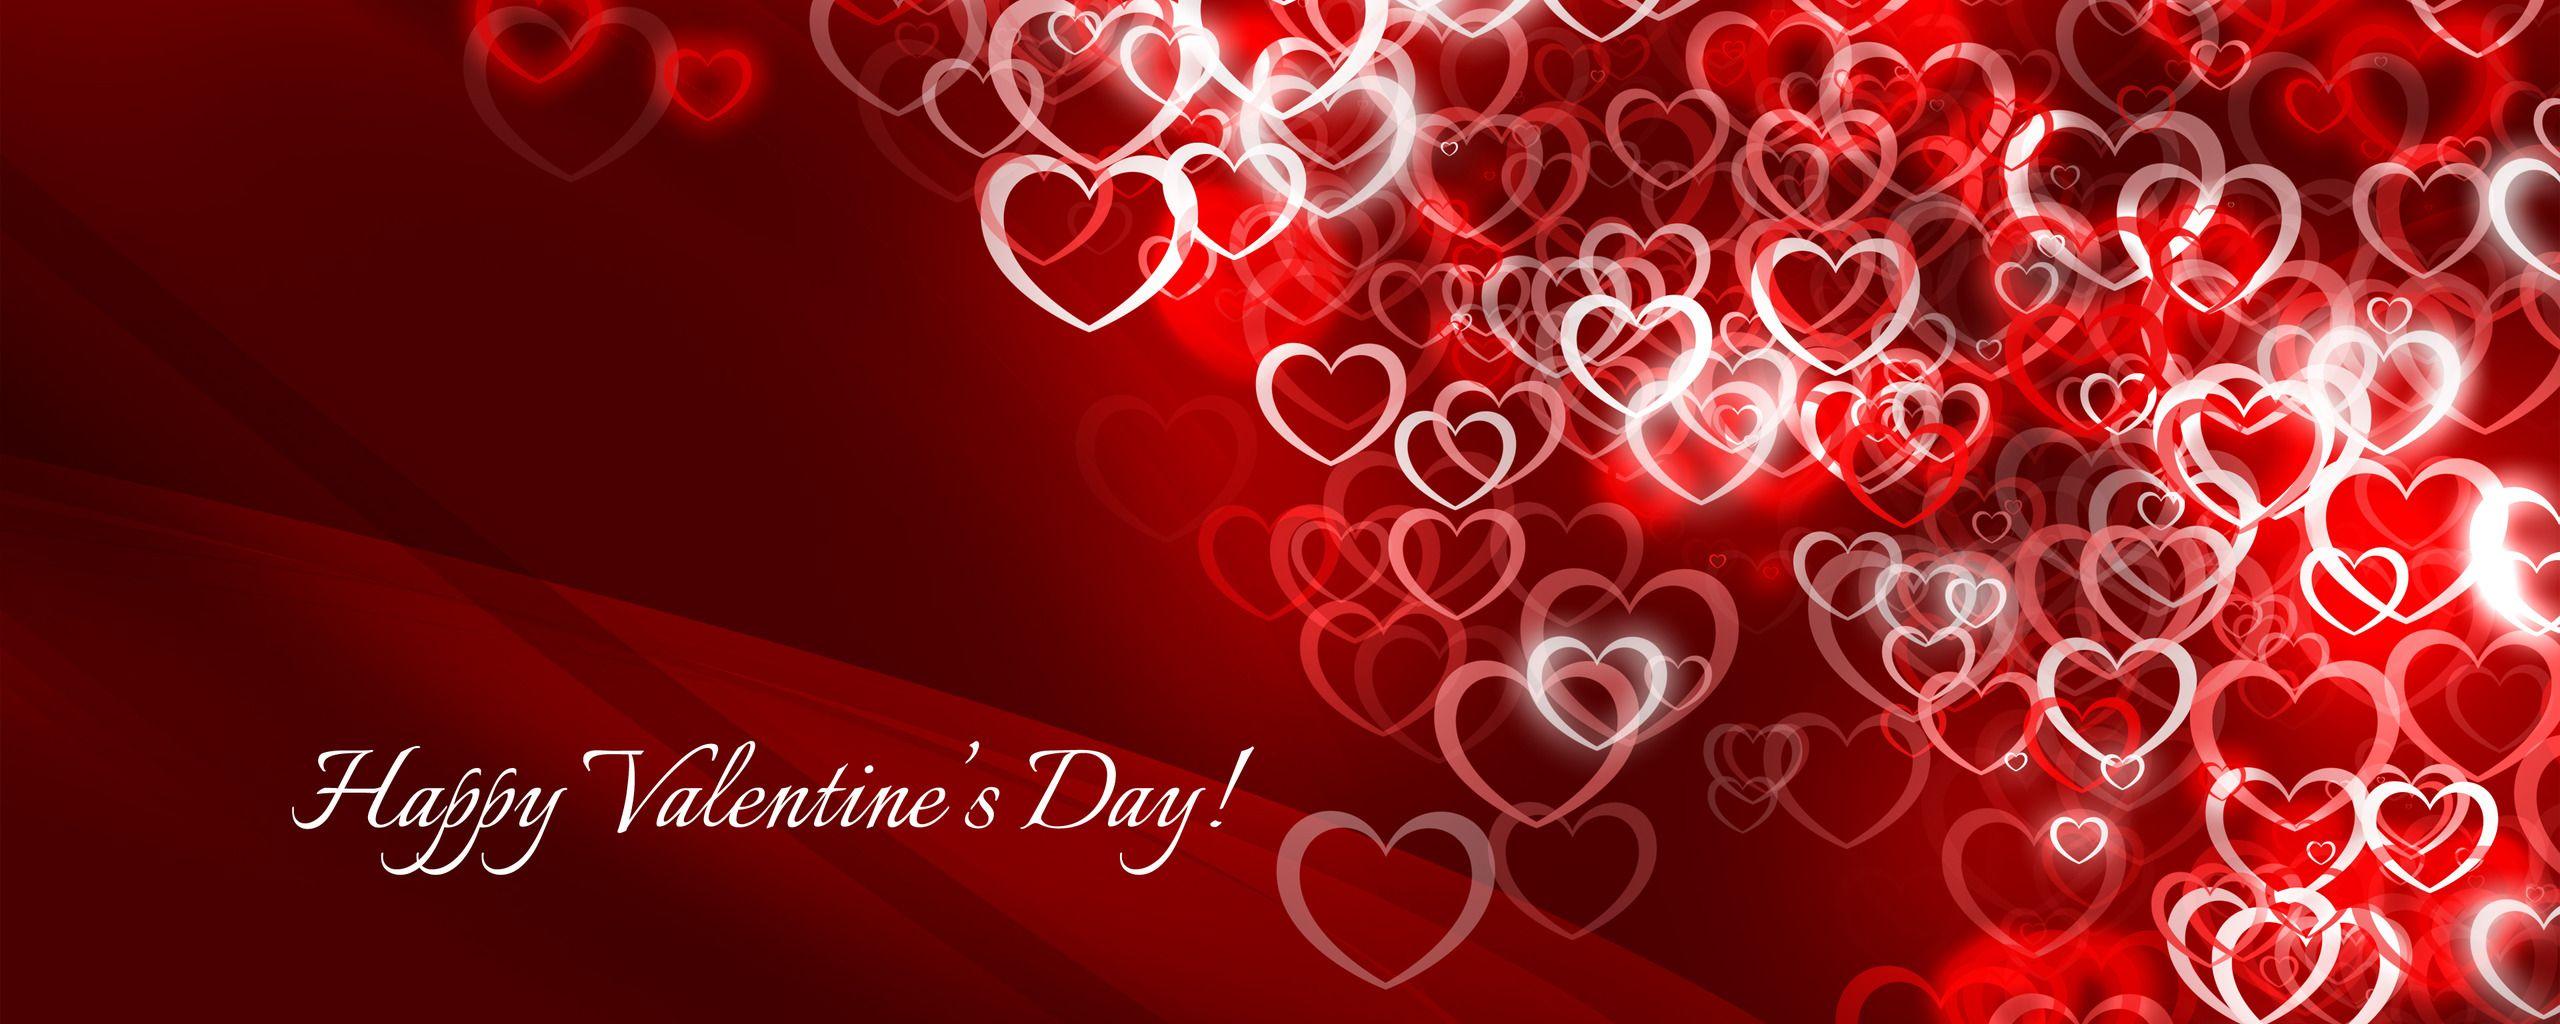 Digital art love wallpaper from Valentines Day